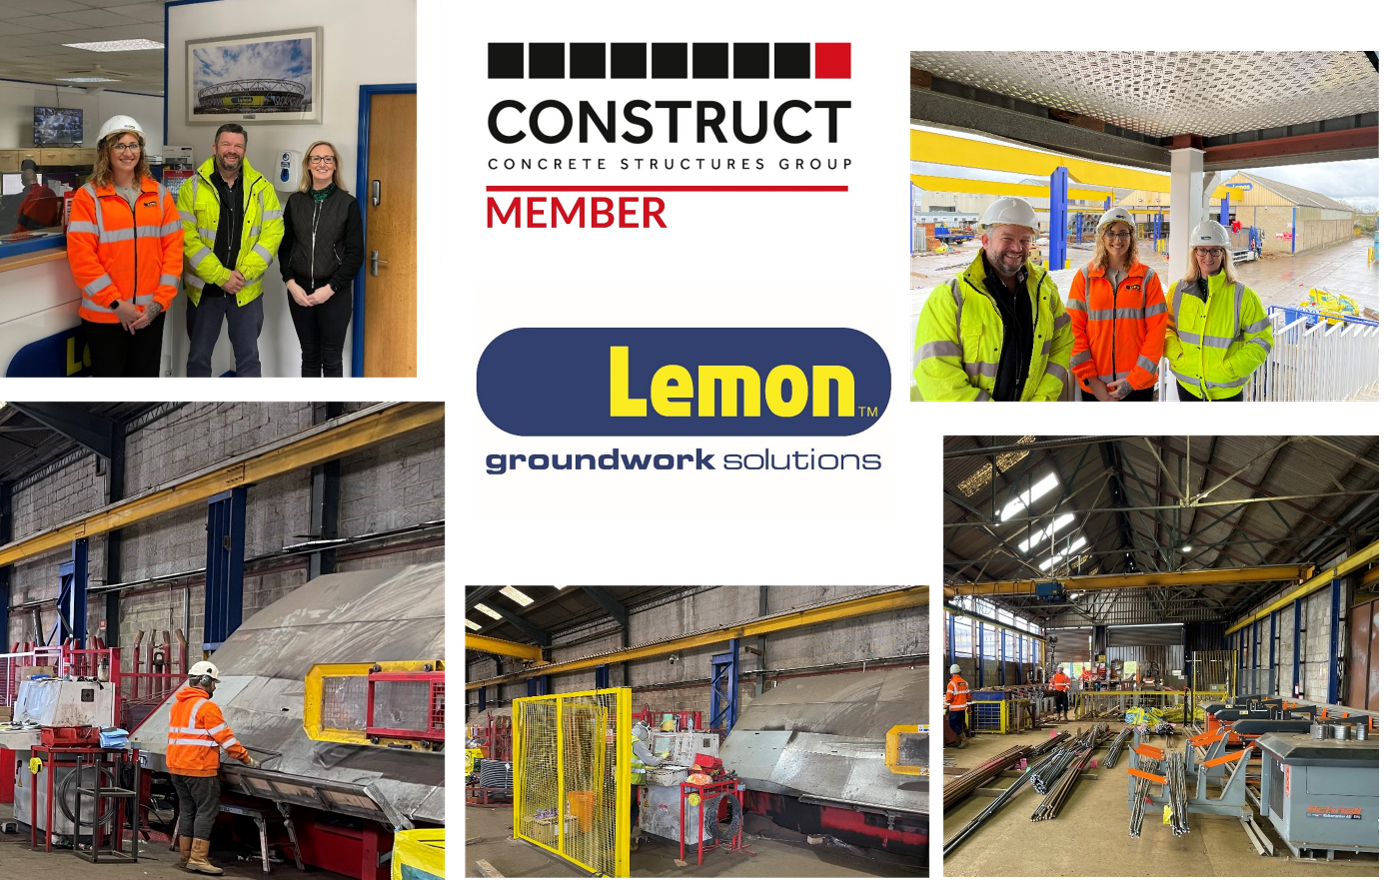 Fantastic visit to new CONSTRUCT member Lemon Groundwork